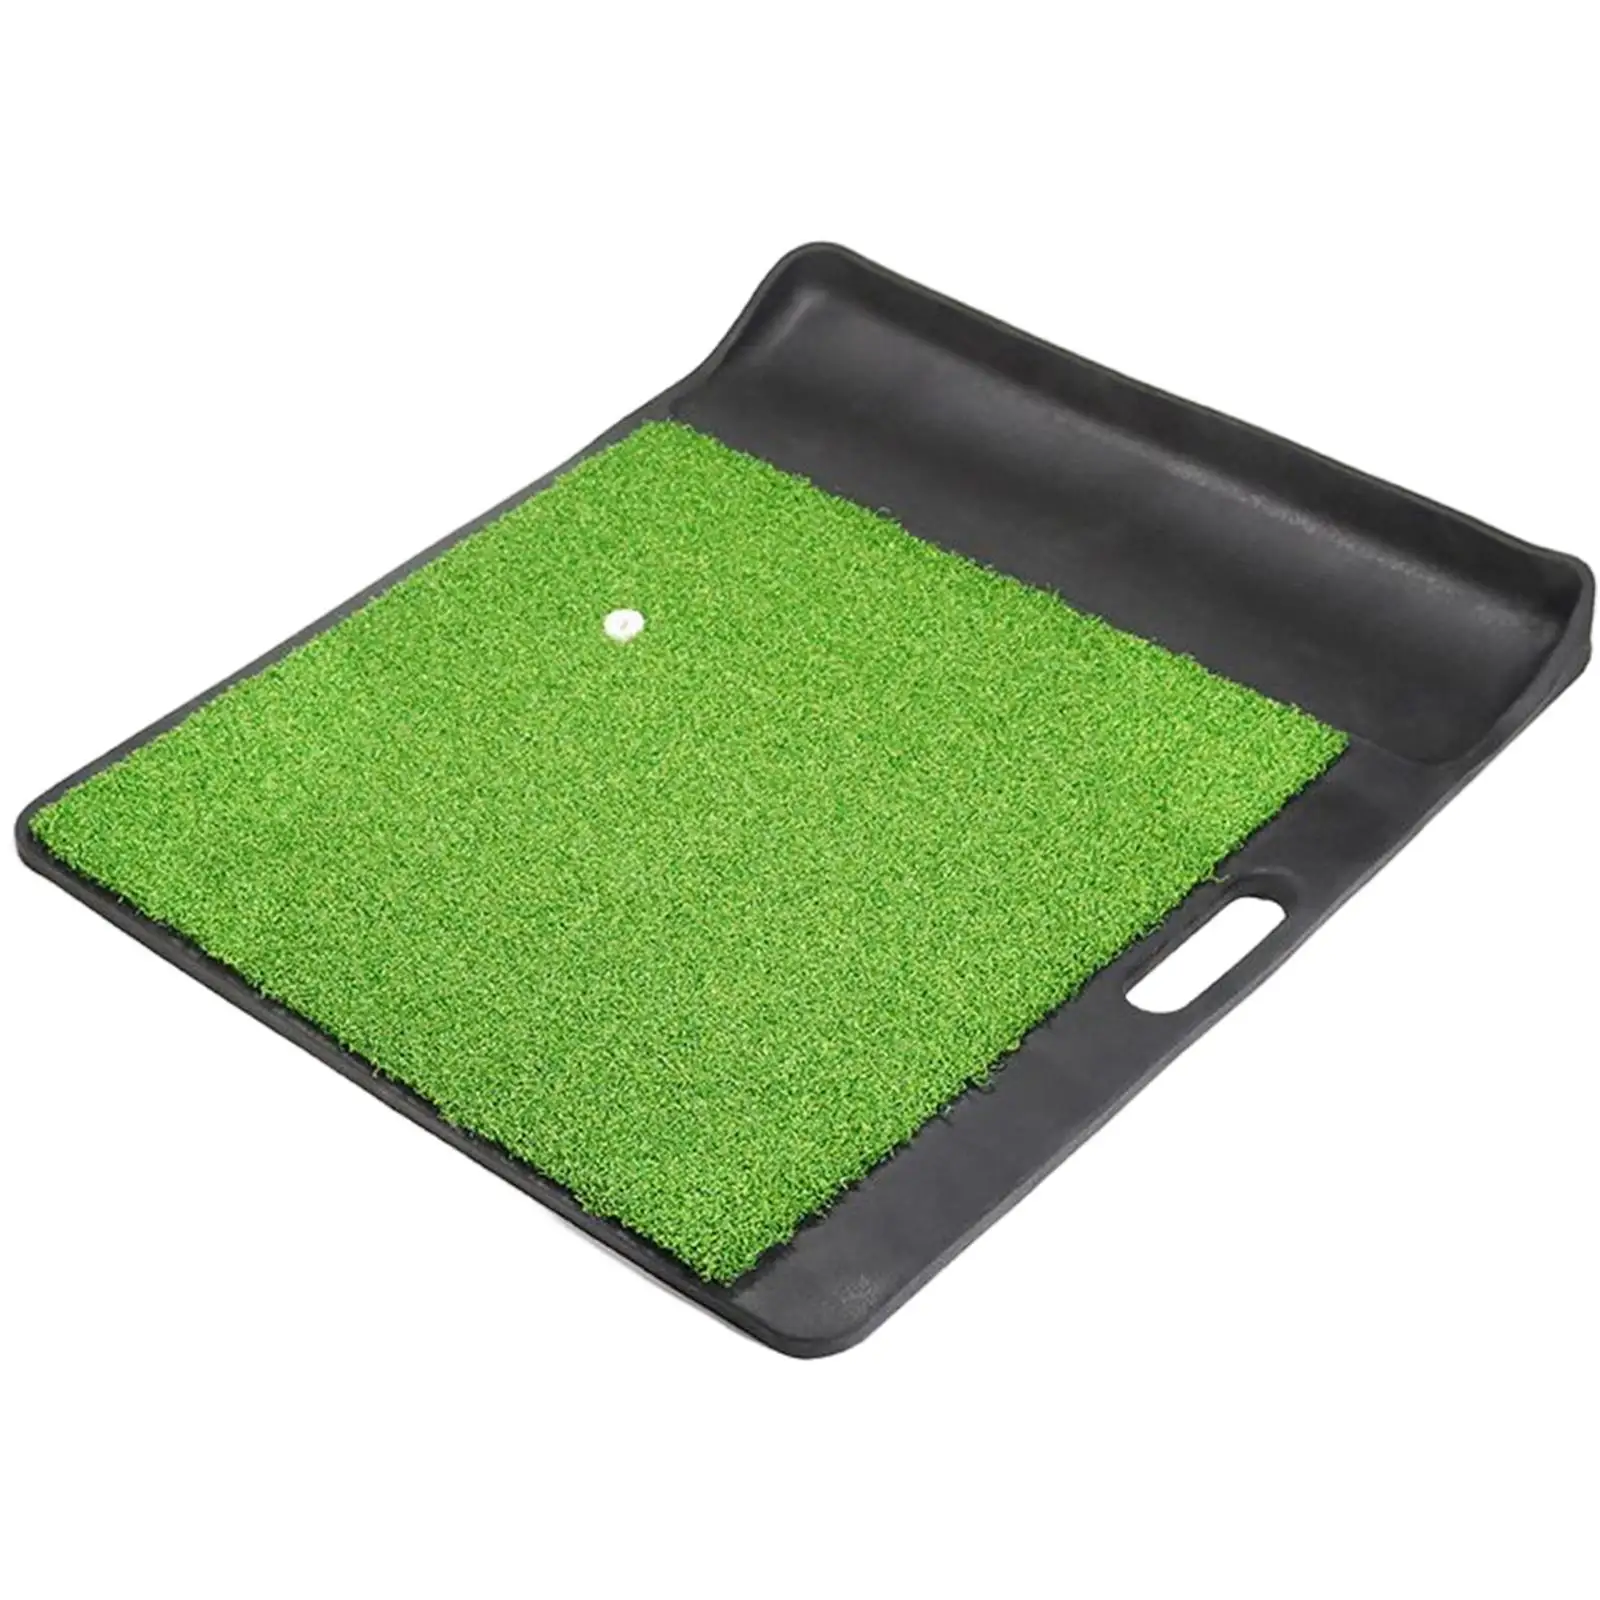 Portable Golf Hitting Mat Golf Practice Training Pad Turf Mat for Backyard